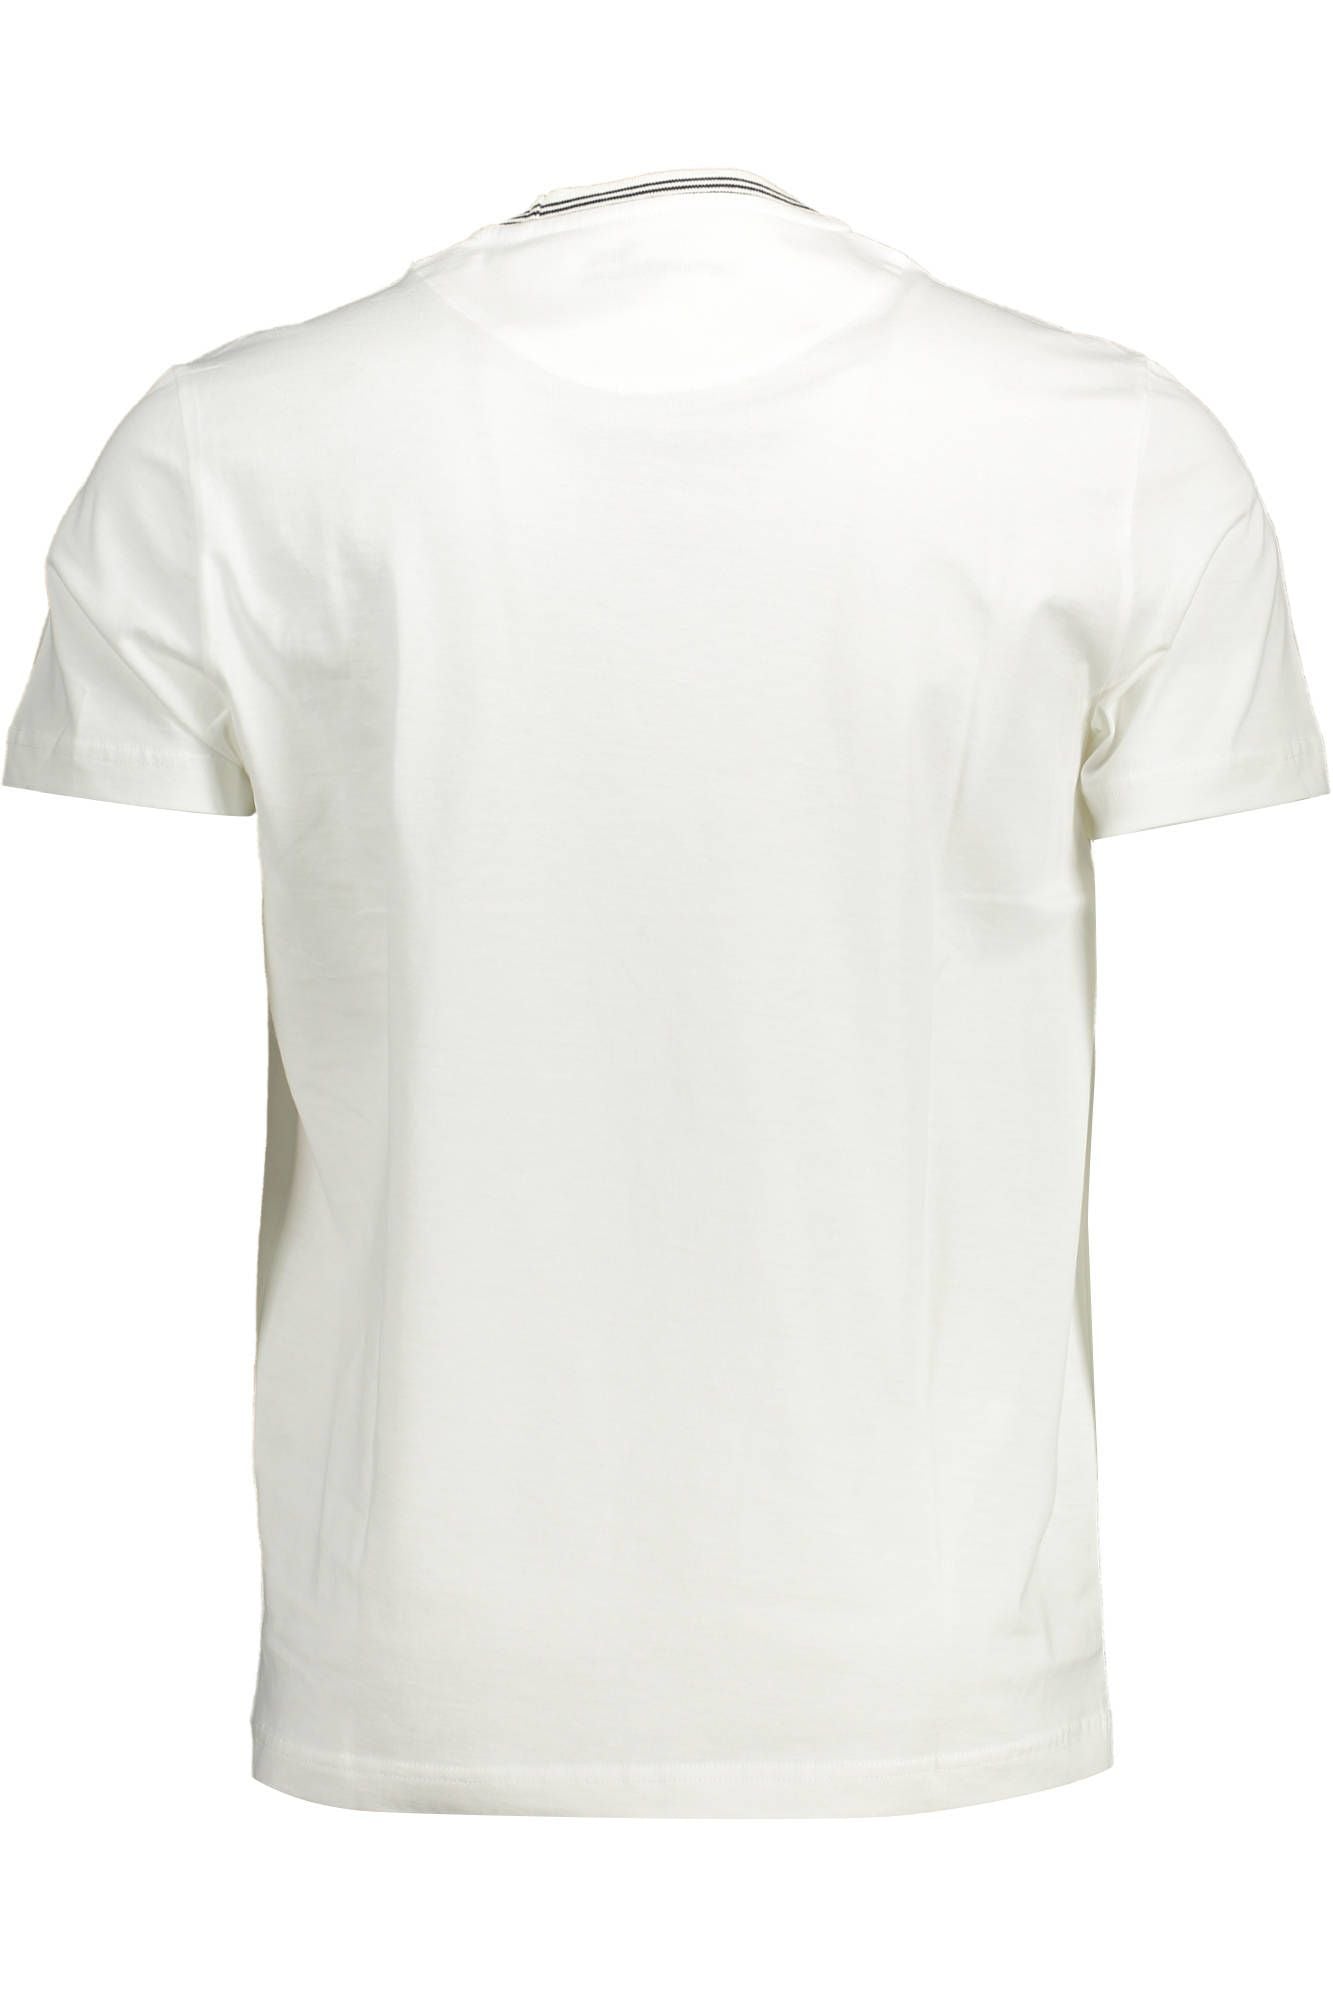 Harmont & Blaine White Cotton T-Shirt